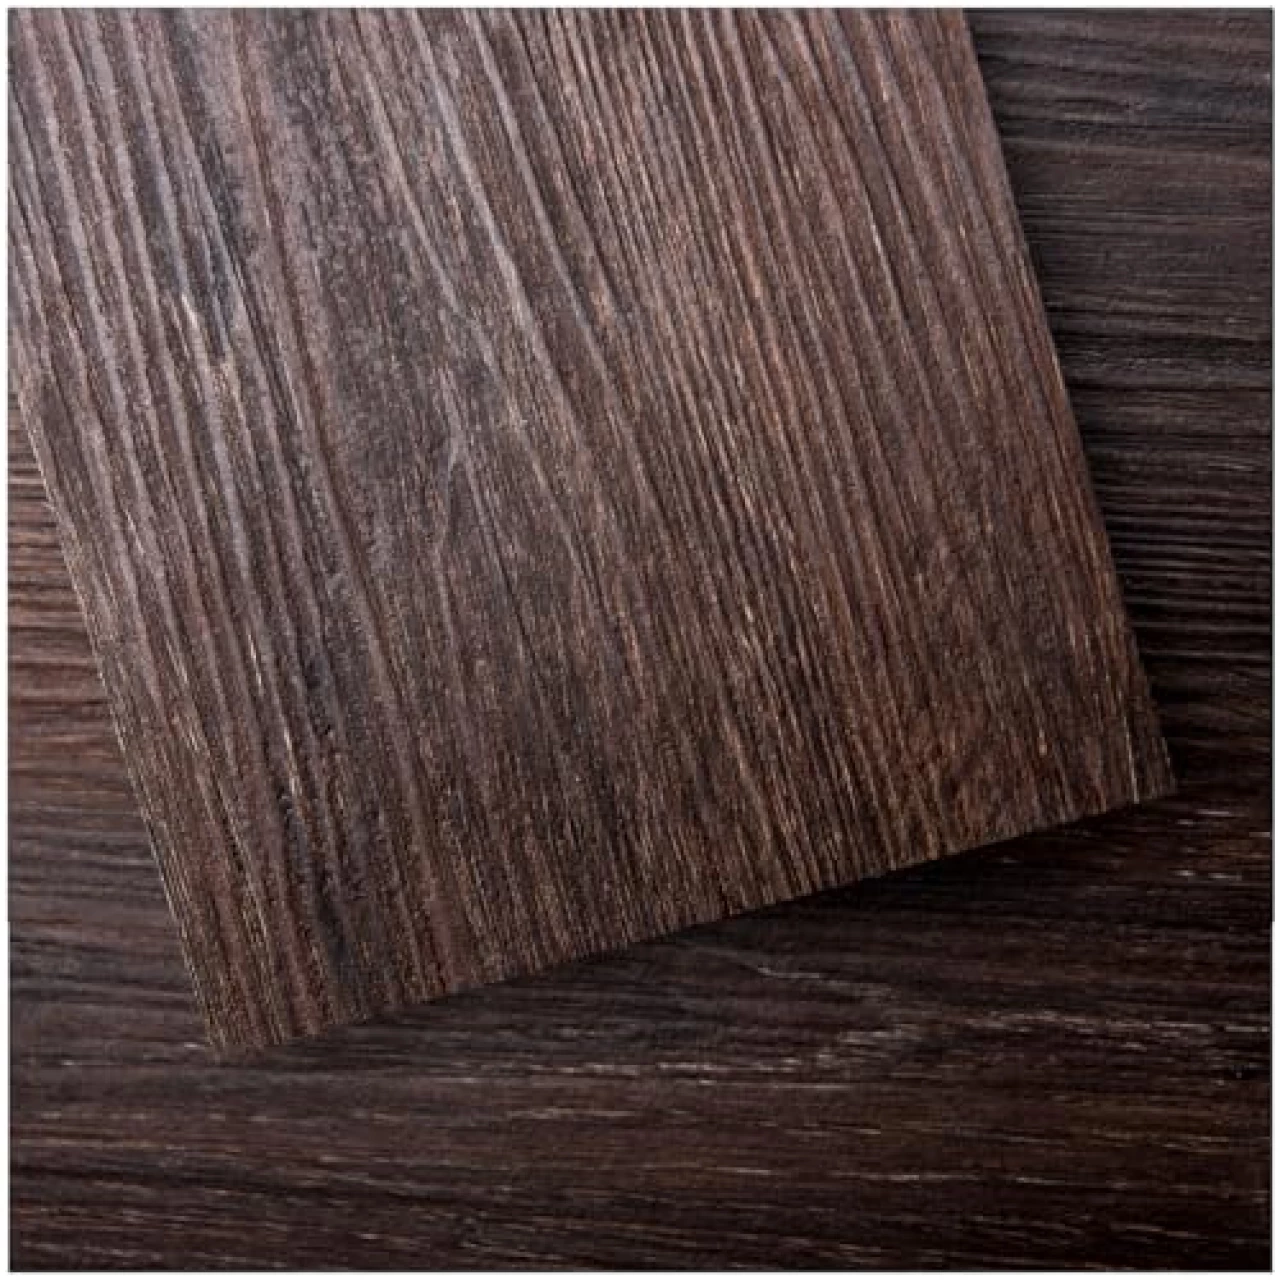 Art3d Peel and Stick Floor Tile Vinyl Wood Plank 36-Pack 54 Sq.Ft, Brown Stone, Rigid Surface Hard Core Easy DIY Self-Adhesive Flooring